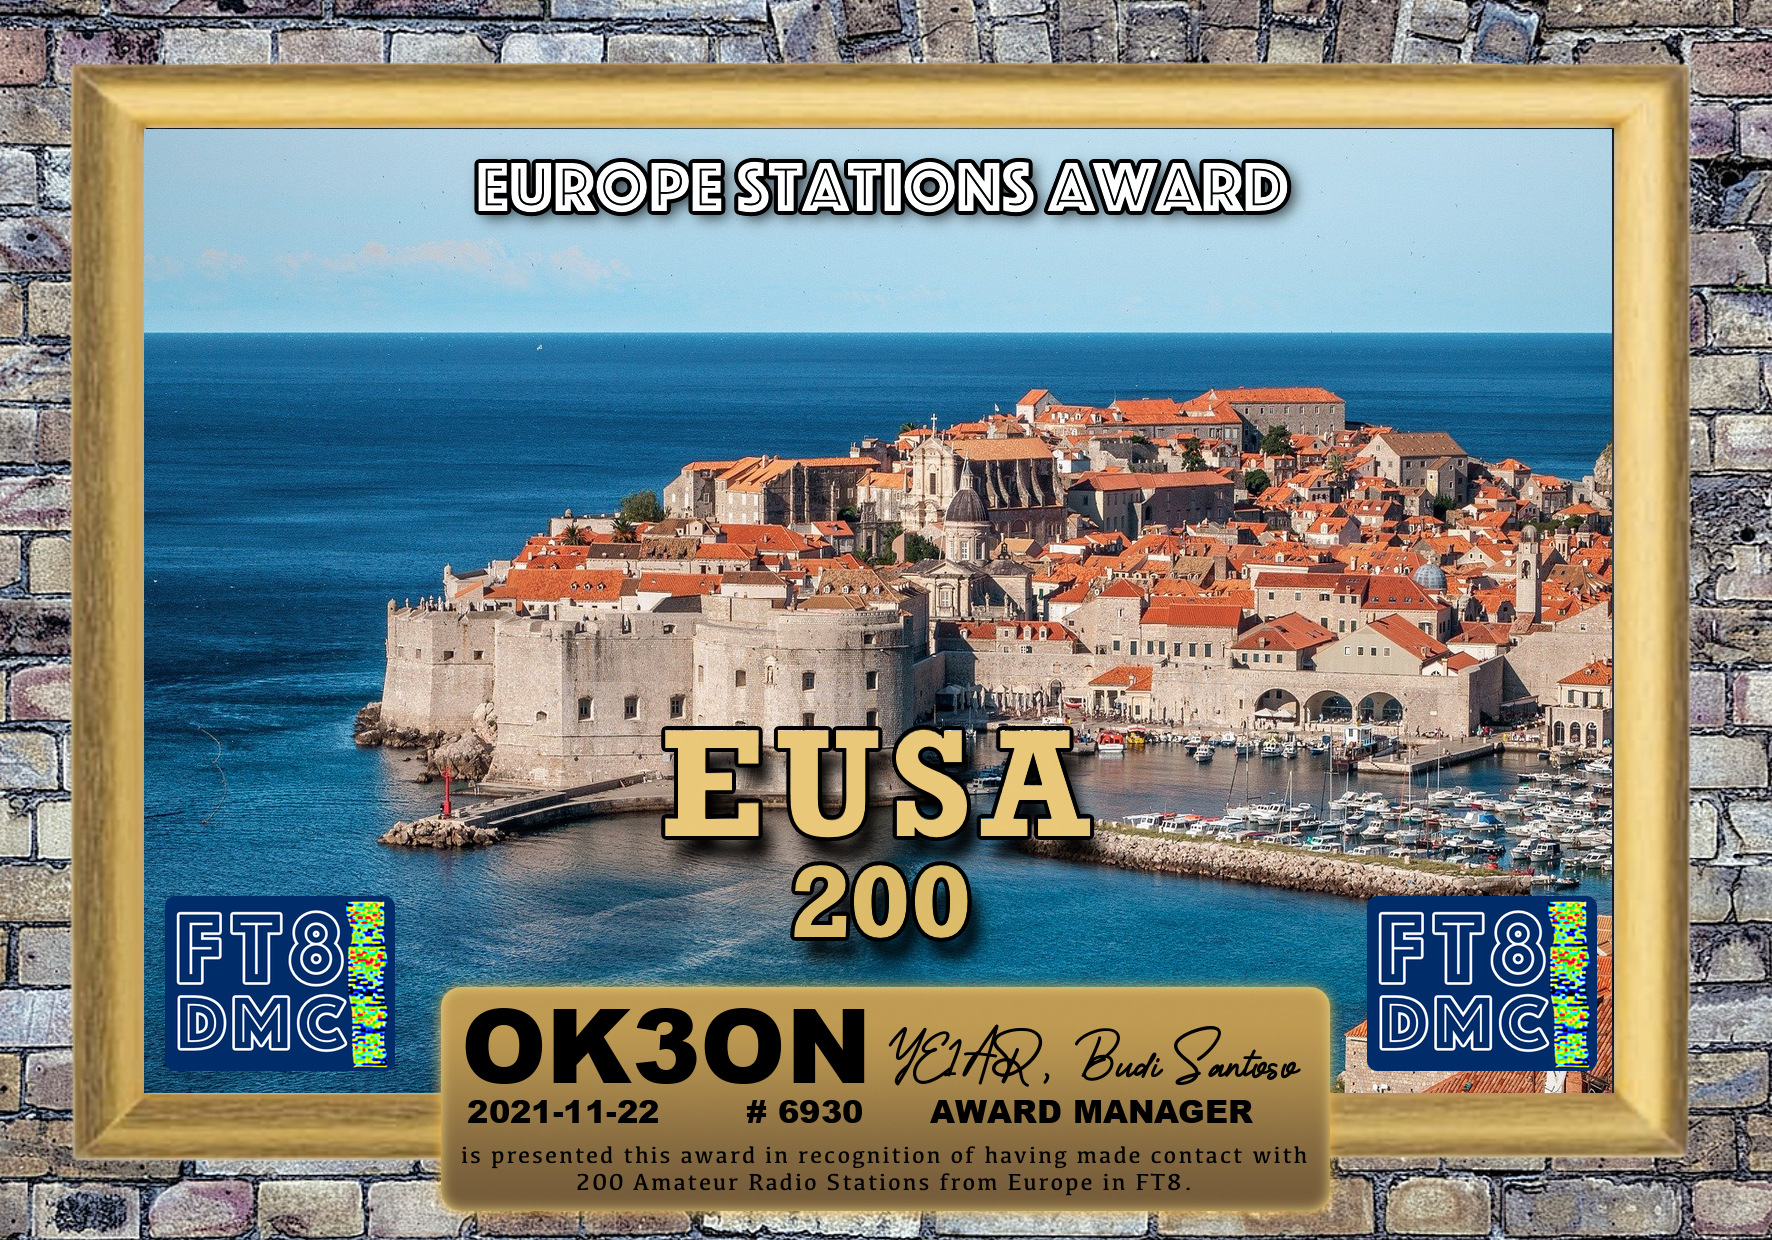 awards/OK3ON-EUSA-200_FT8DMC.jpg